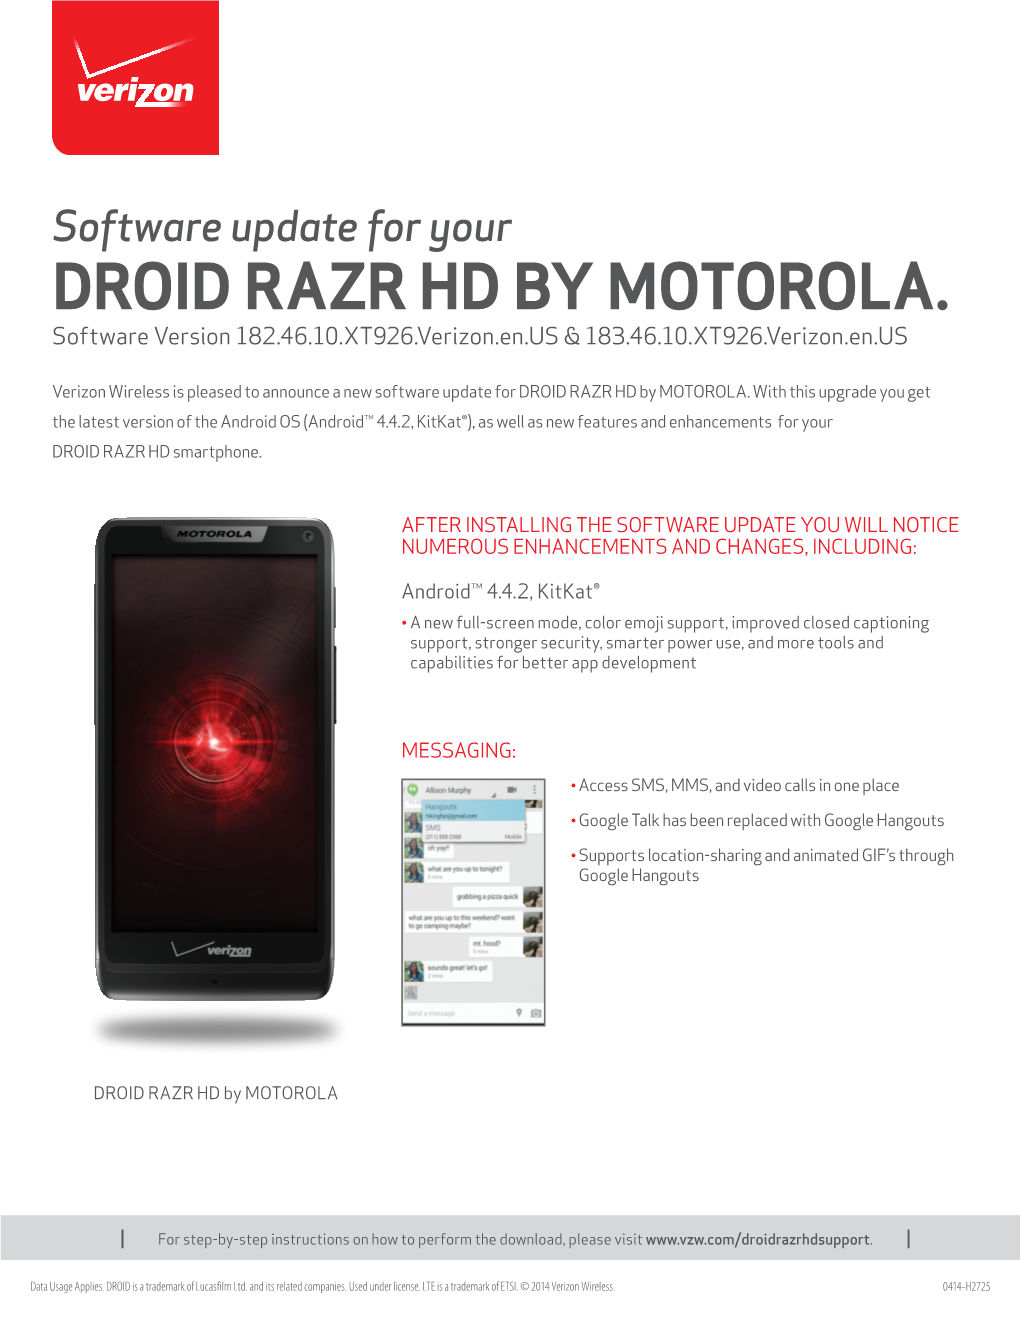 DROID RAZR HD by MOTOROLA. Software Version 182.46.10.XT926.Verizon.En.US & 183.46.10.XT926.Verizon.En.US